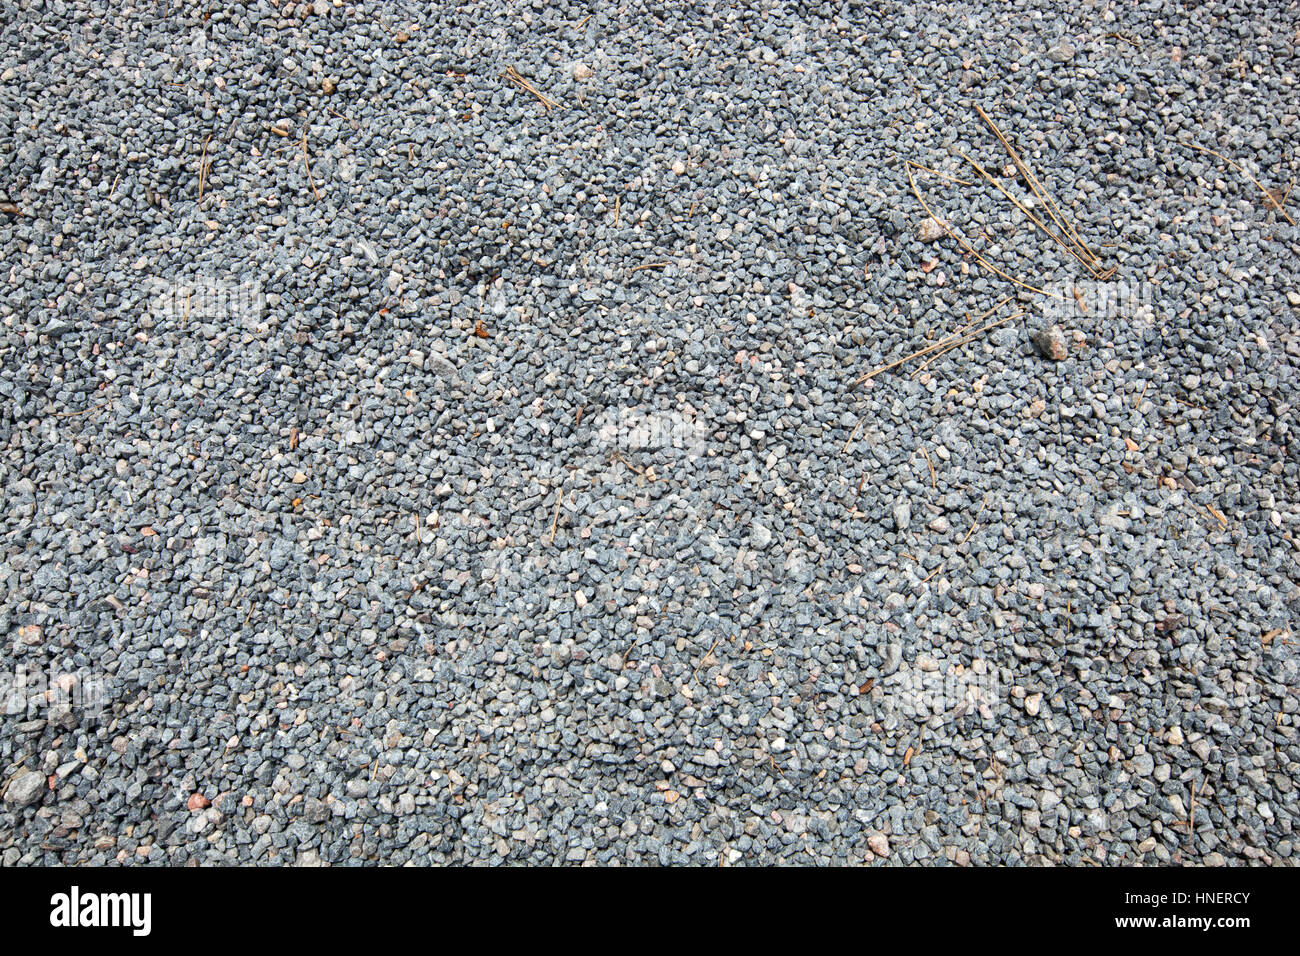 Close-up of fine gravel pile Stock Photo